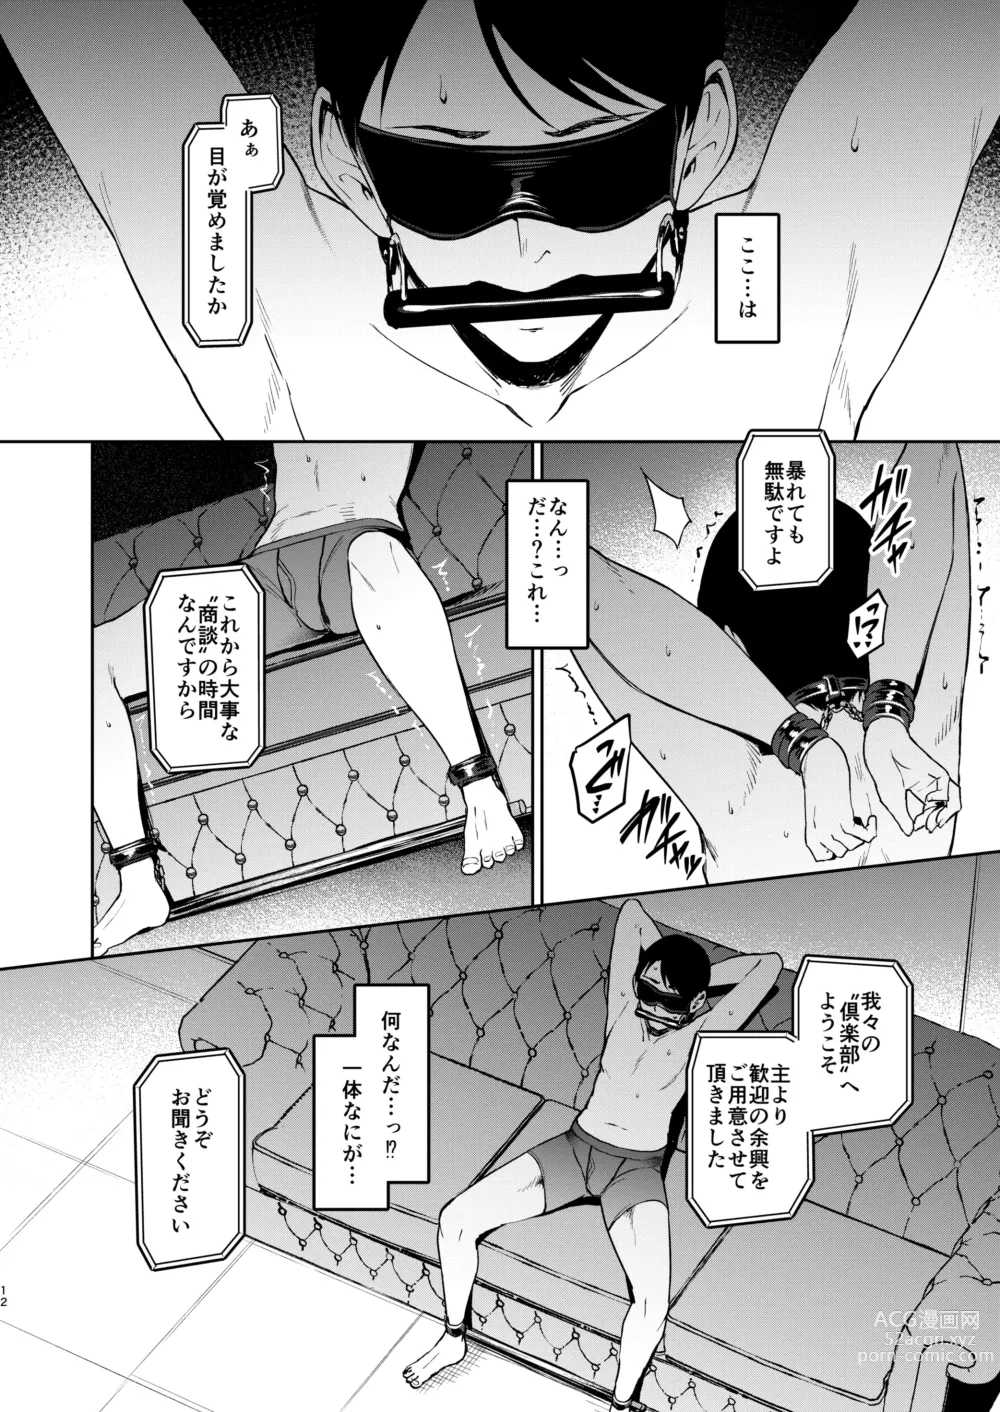 Page 11 of doujinshi Kegareboshi Kuro